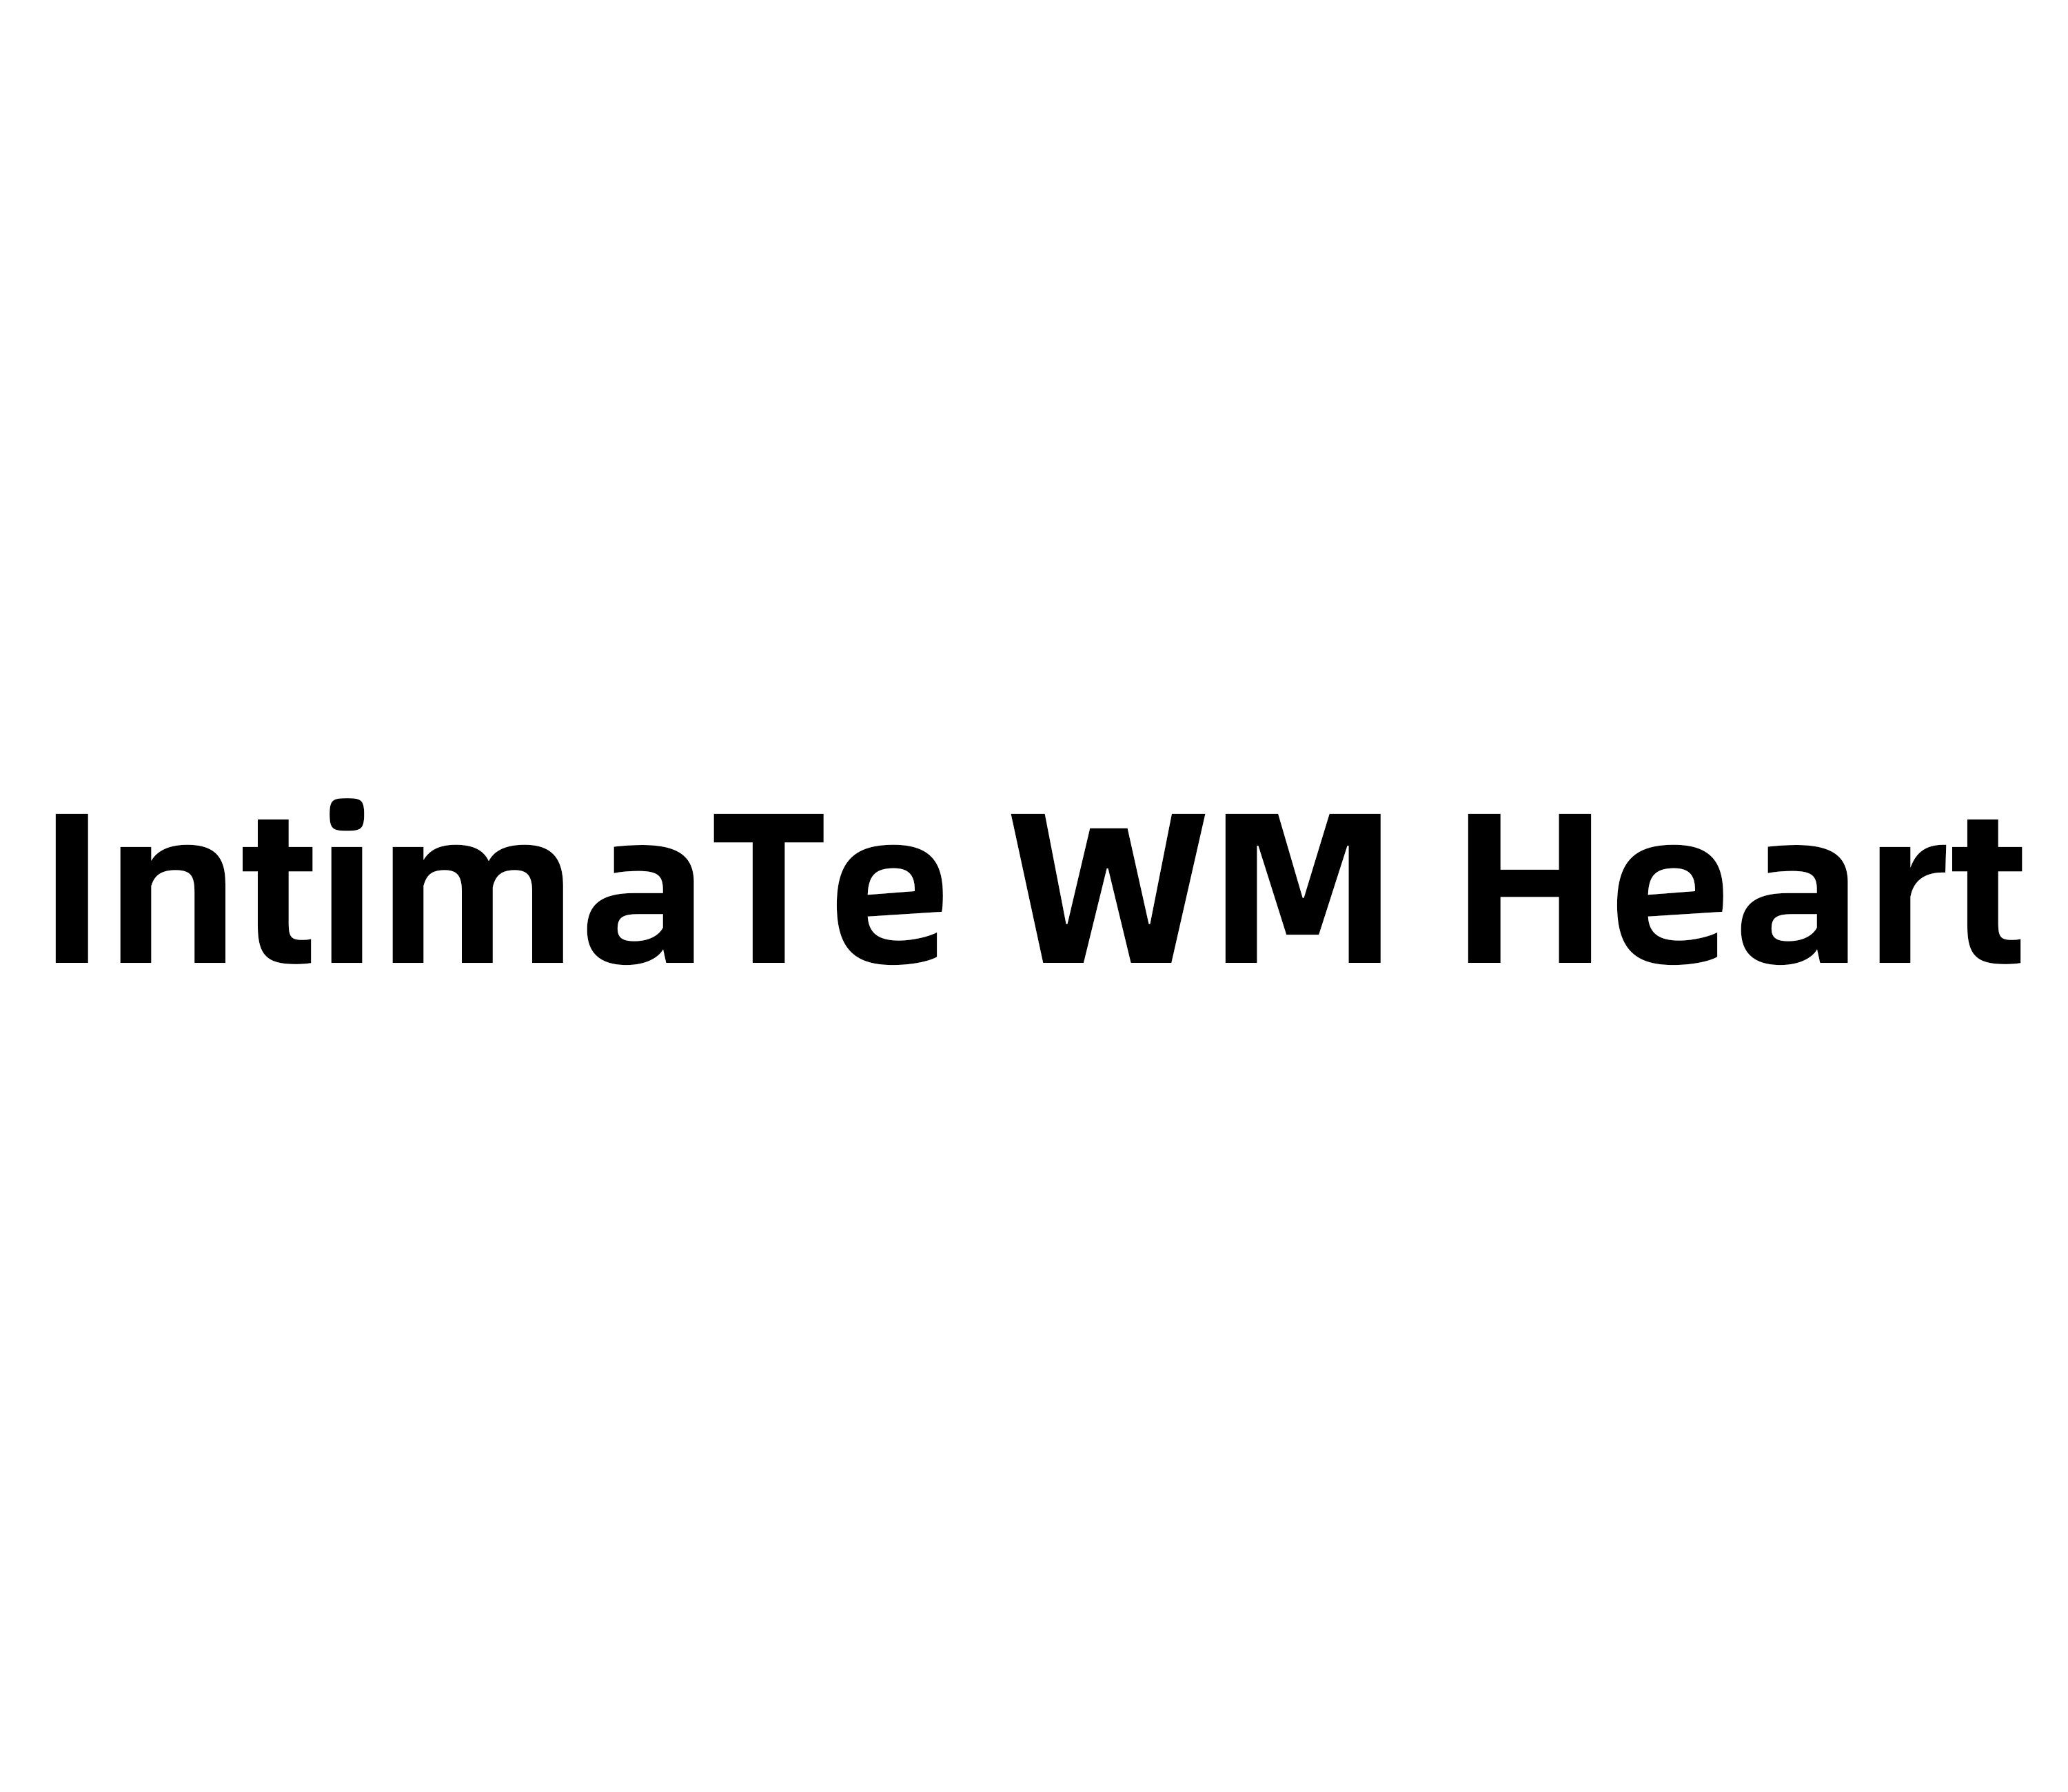 Intimate WM Heart